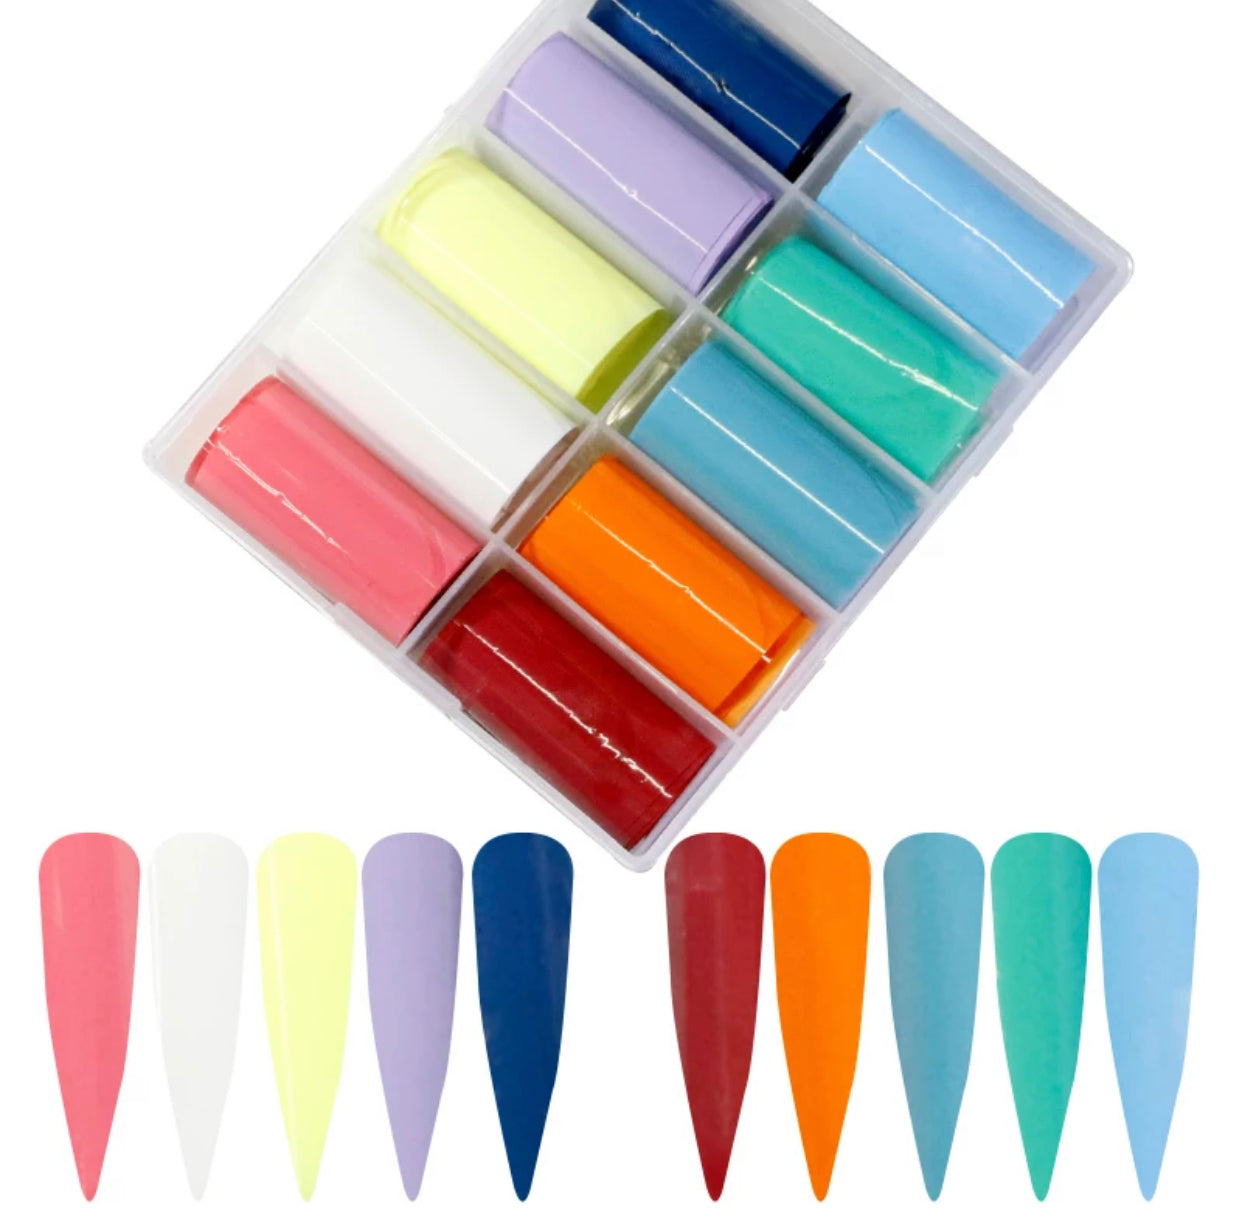 LV Foil Transfer set (10 colors)